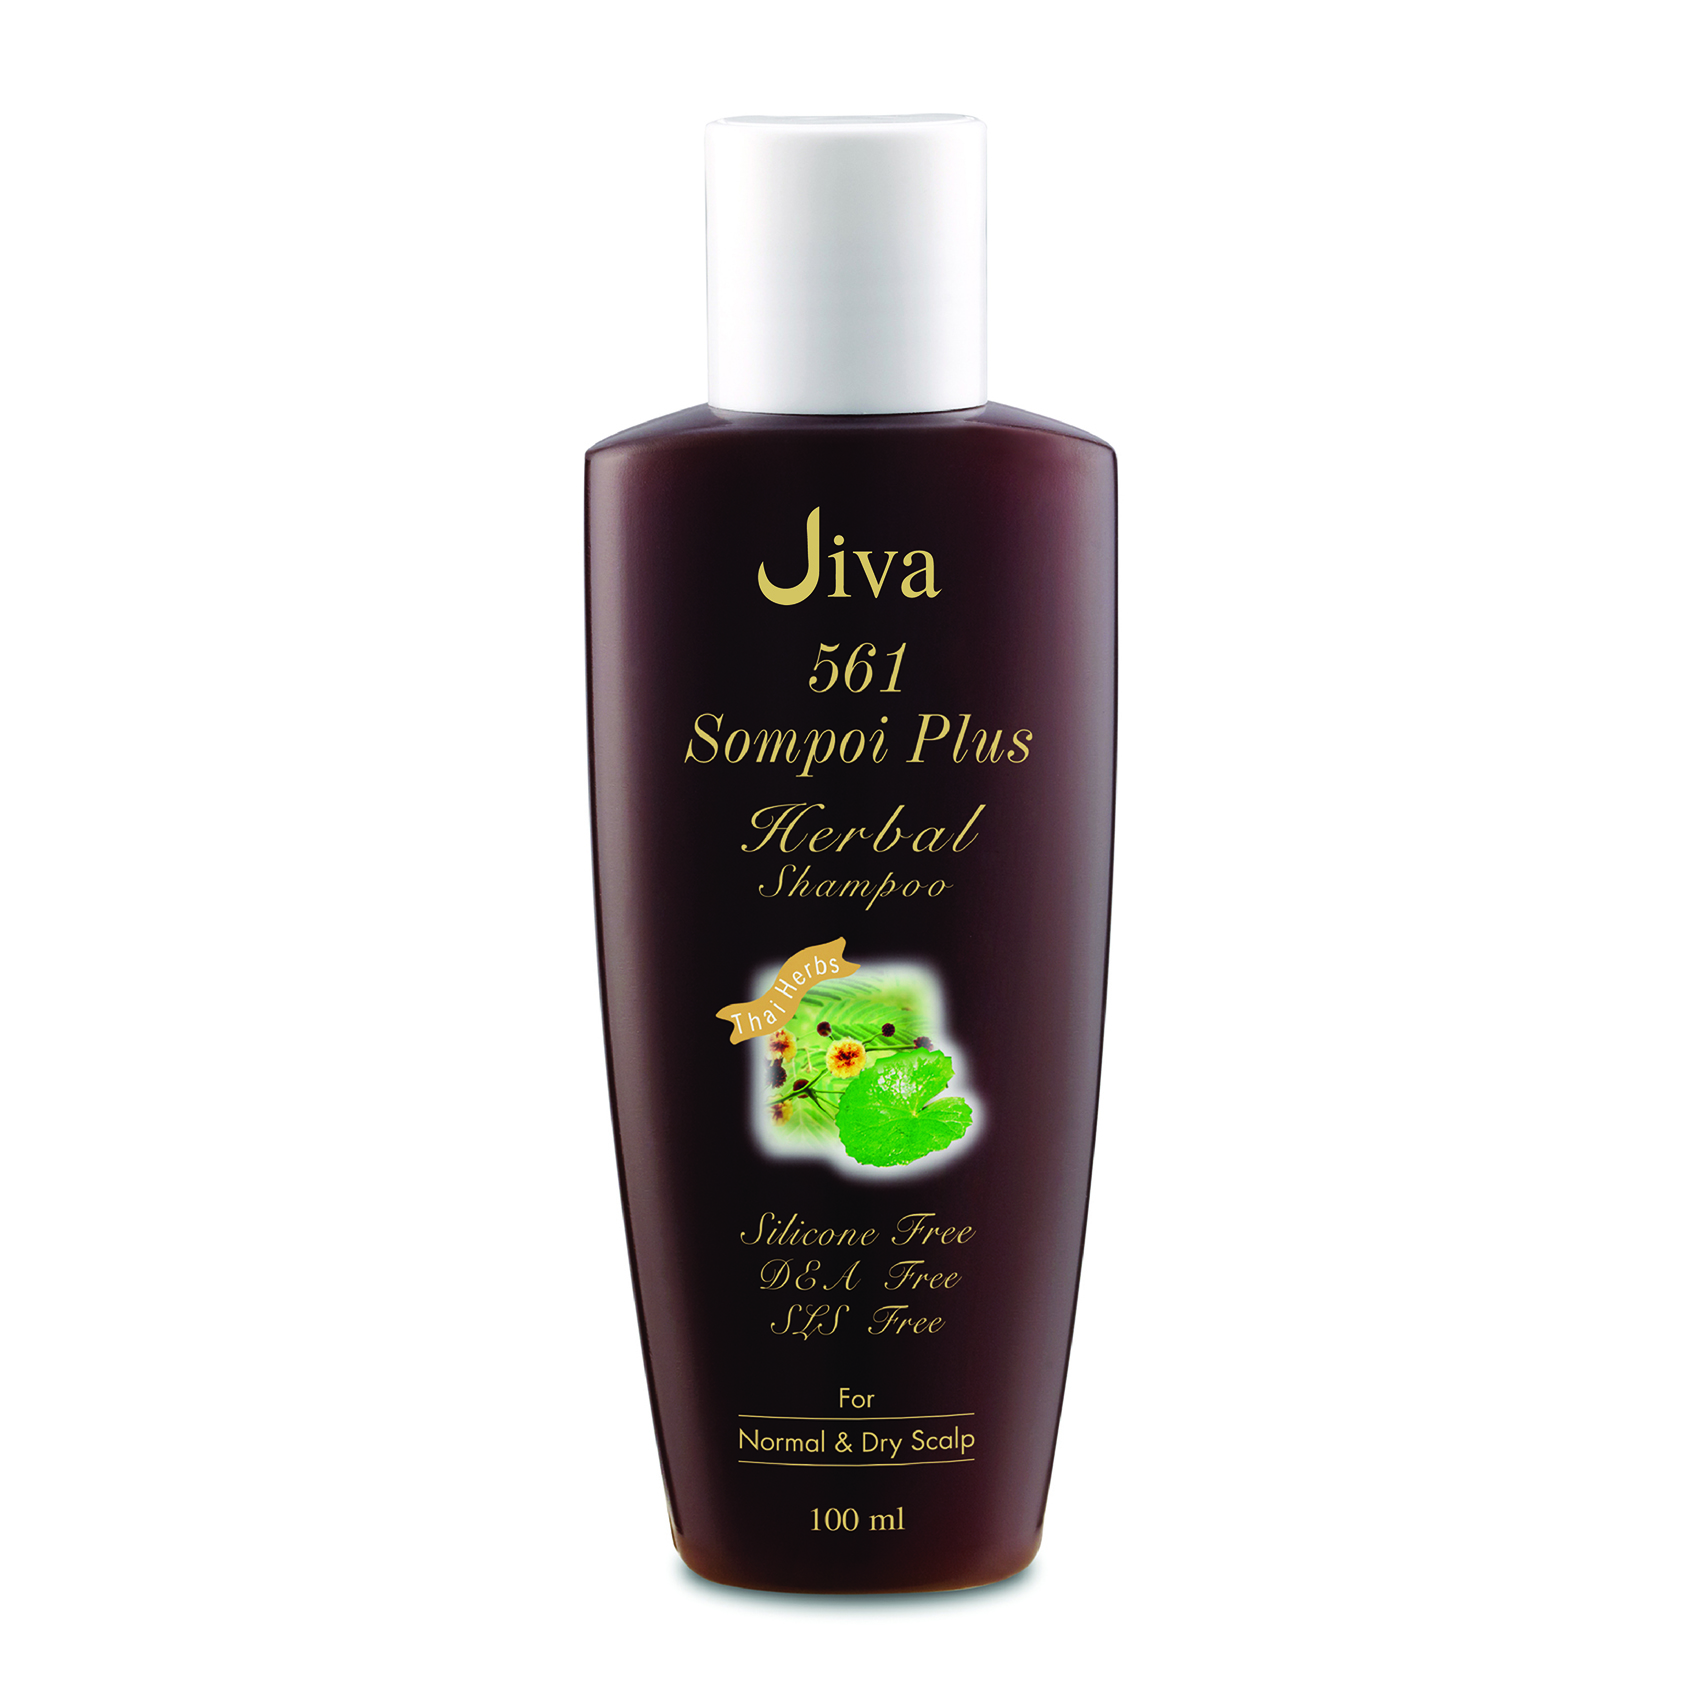 JIVA Sompoi Plus Herbal Shampoo - จีวา ส้มป่อย พลัส เฮอบอล แชมพู